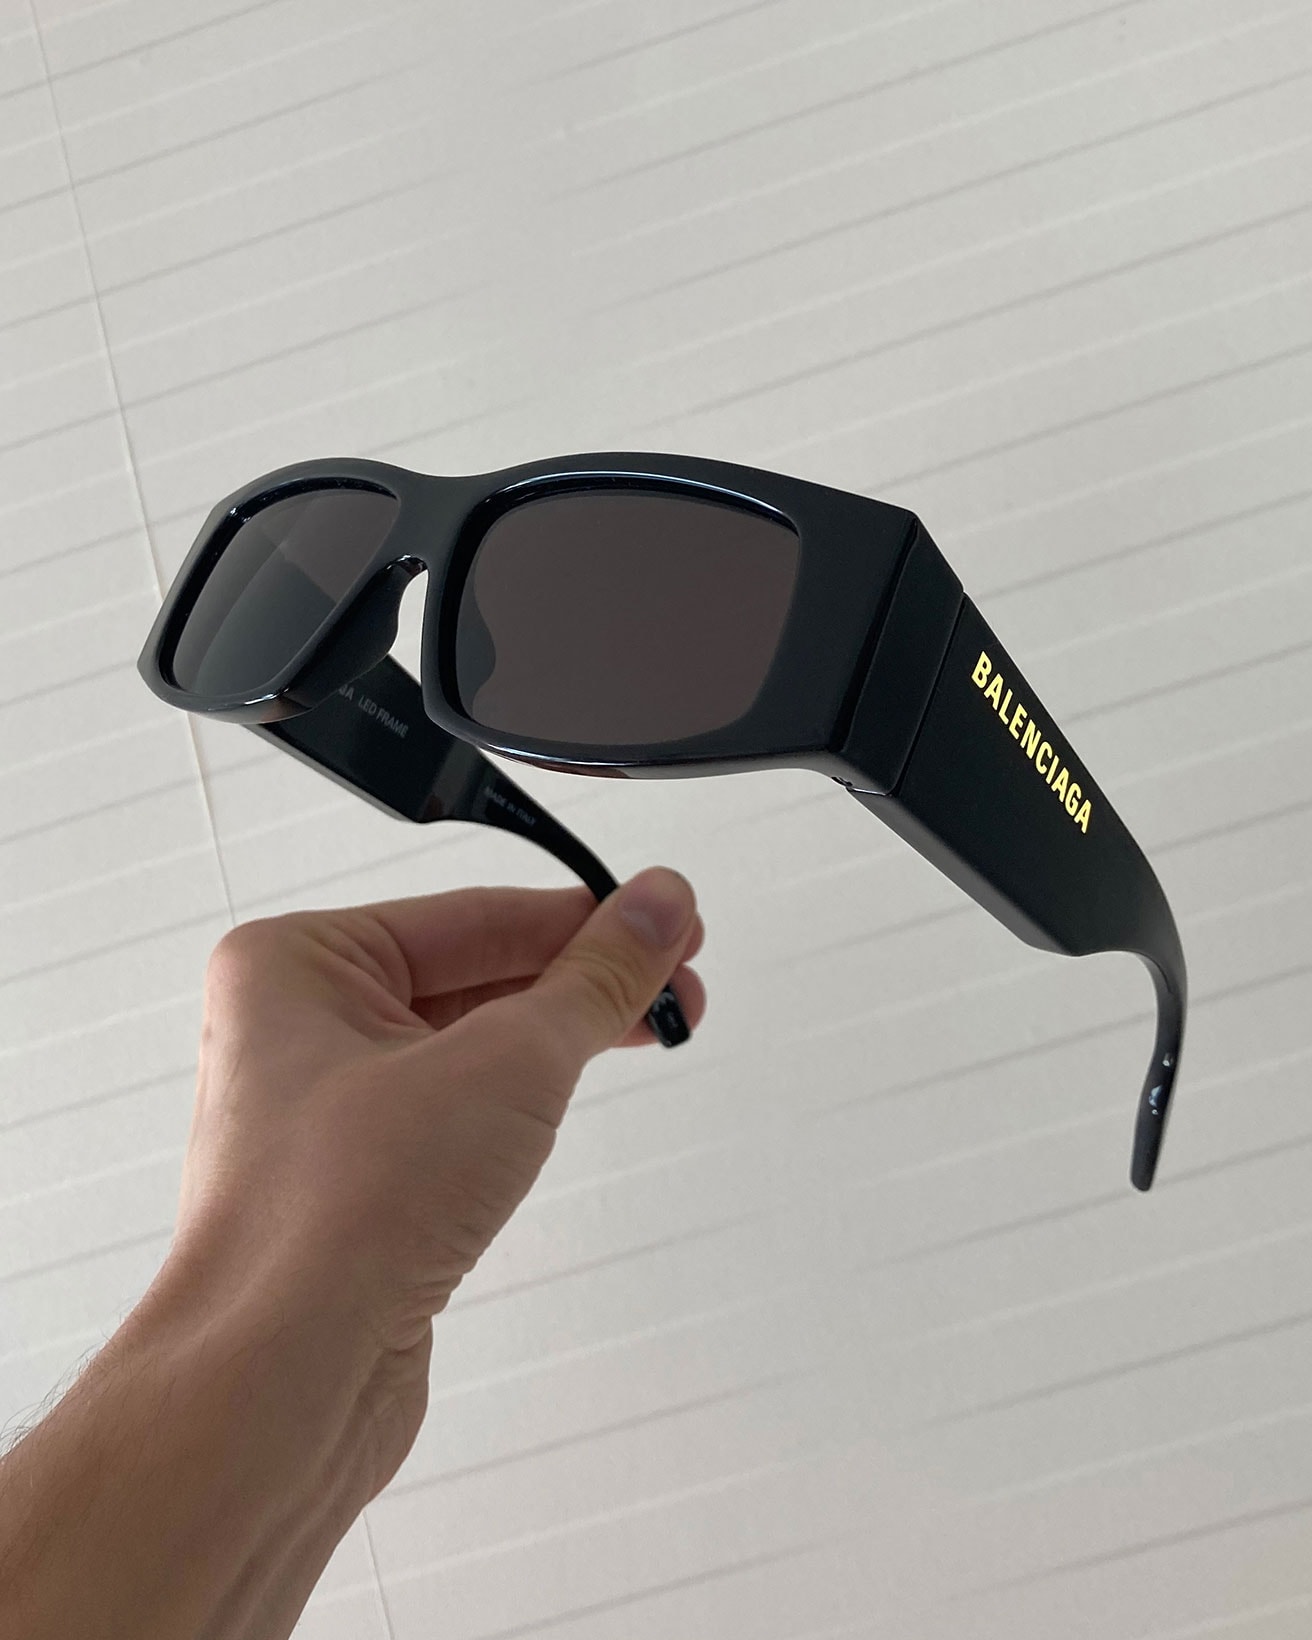 Balenciaga Eyewear LED Frame Light-up Sunglasses Closeup Details